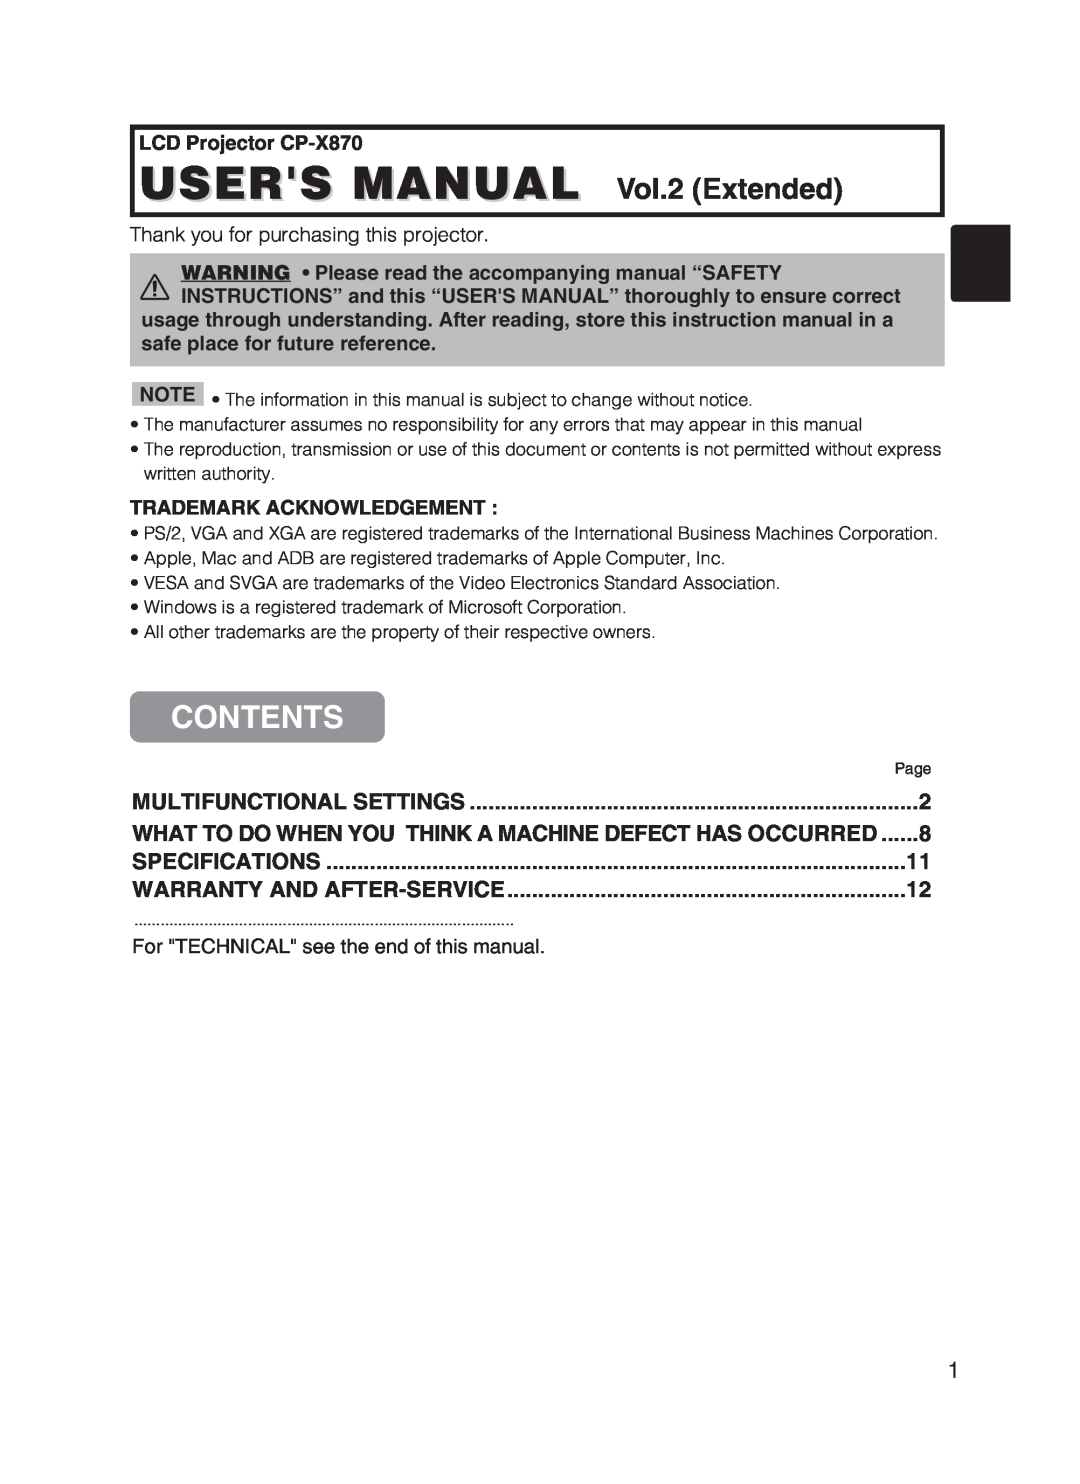 Hitachi CP-X870 user manual Contents 